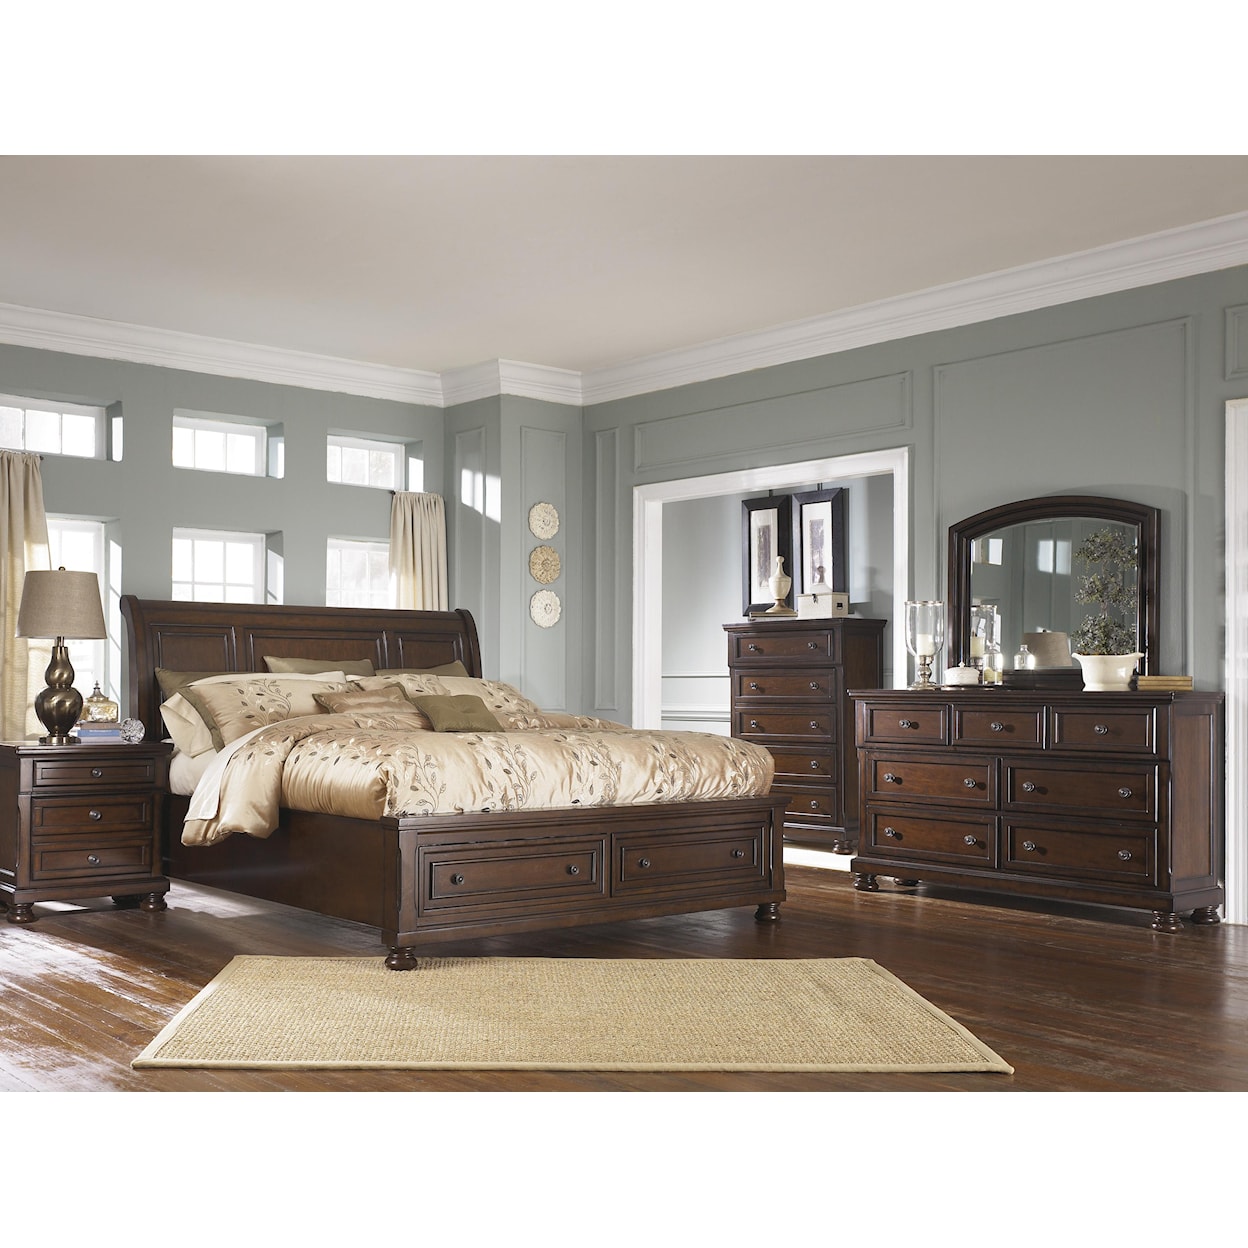 Ashley Furniture Porter Queen Bedroom Group